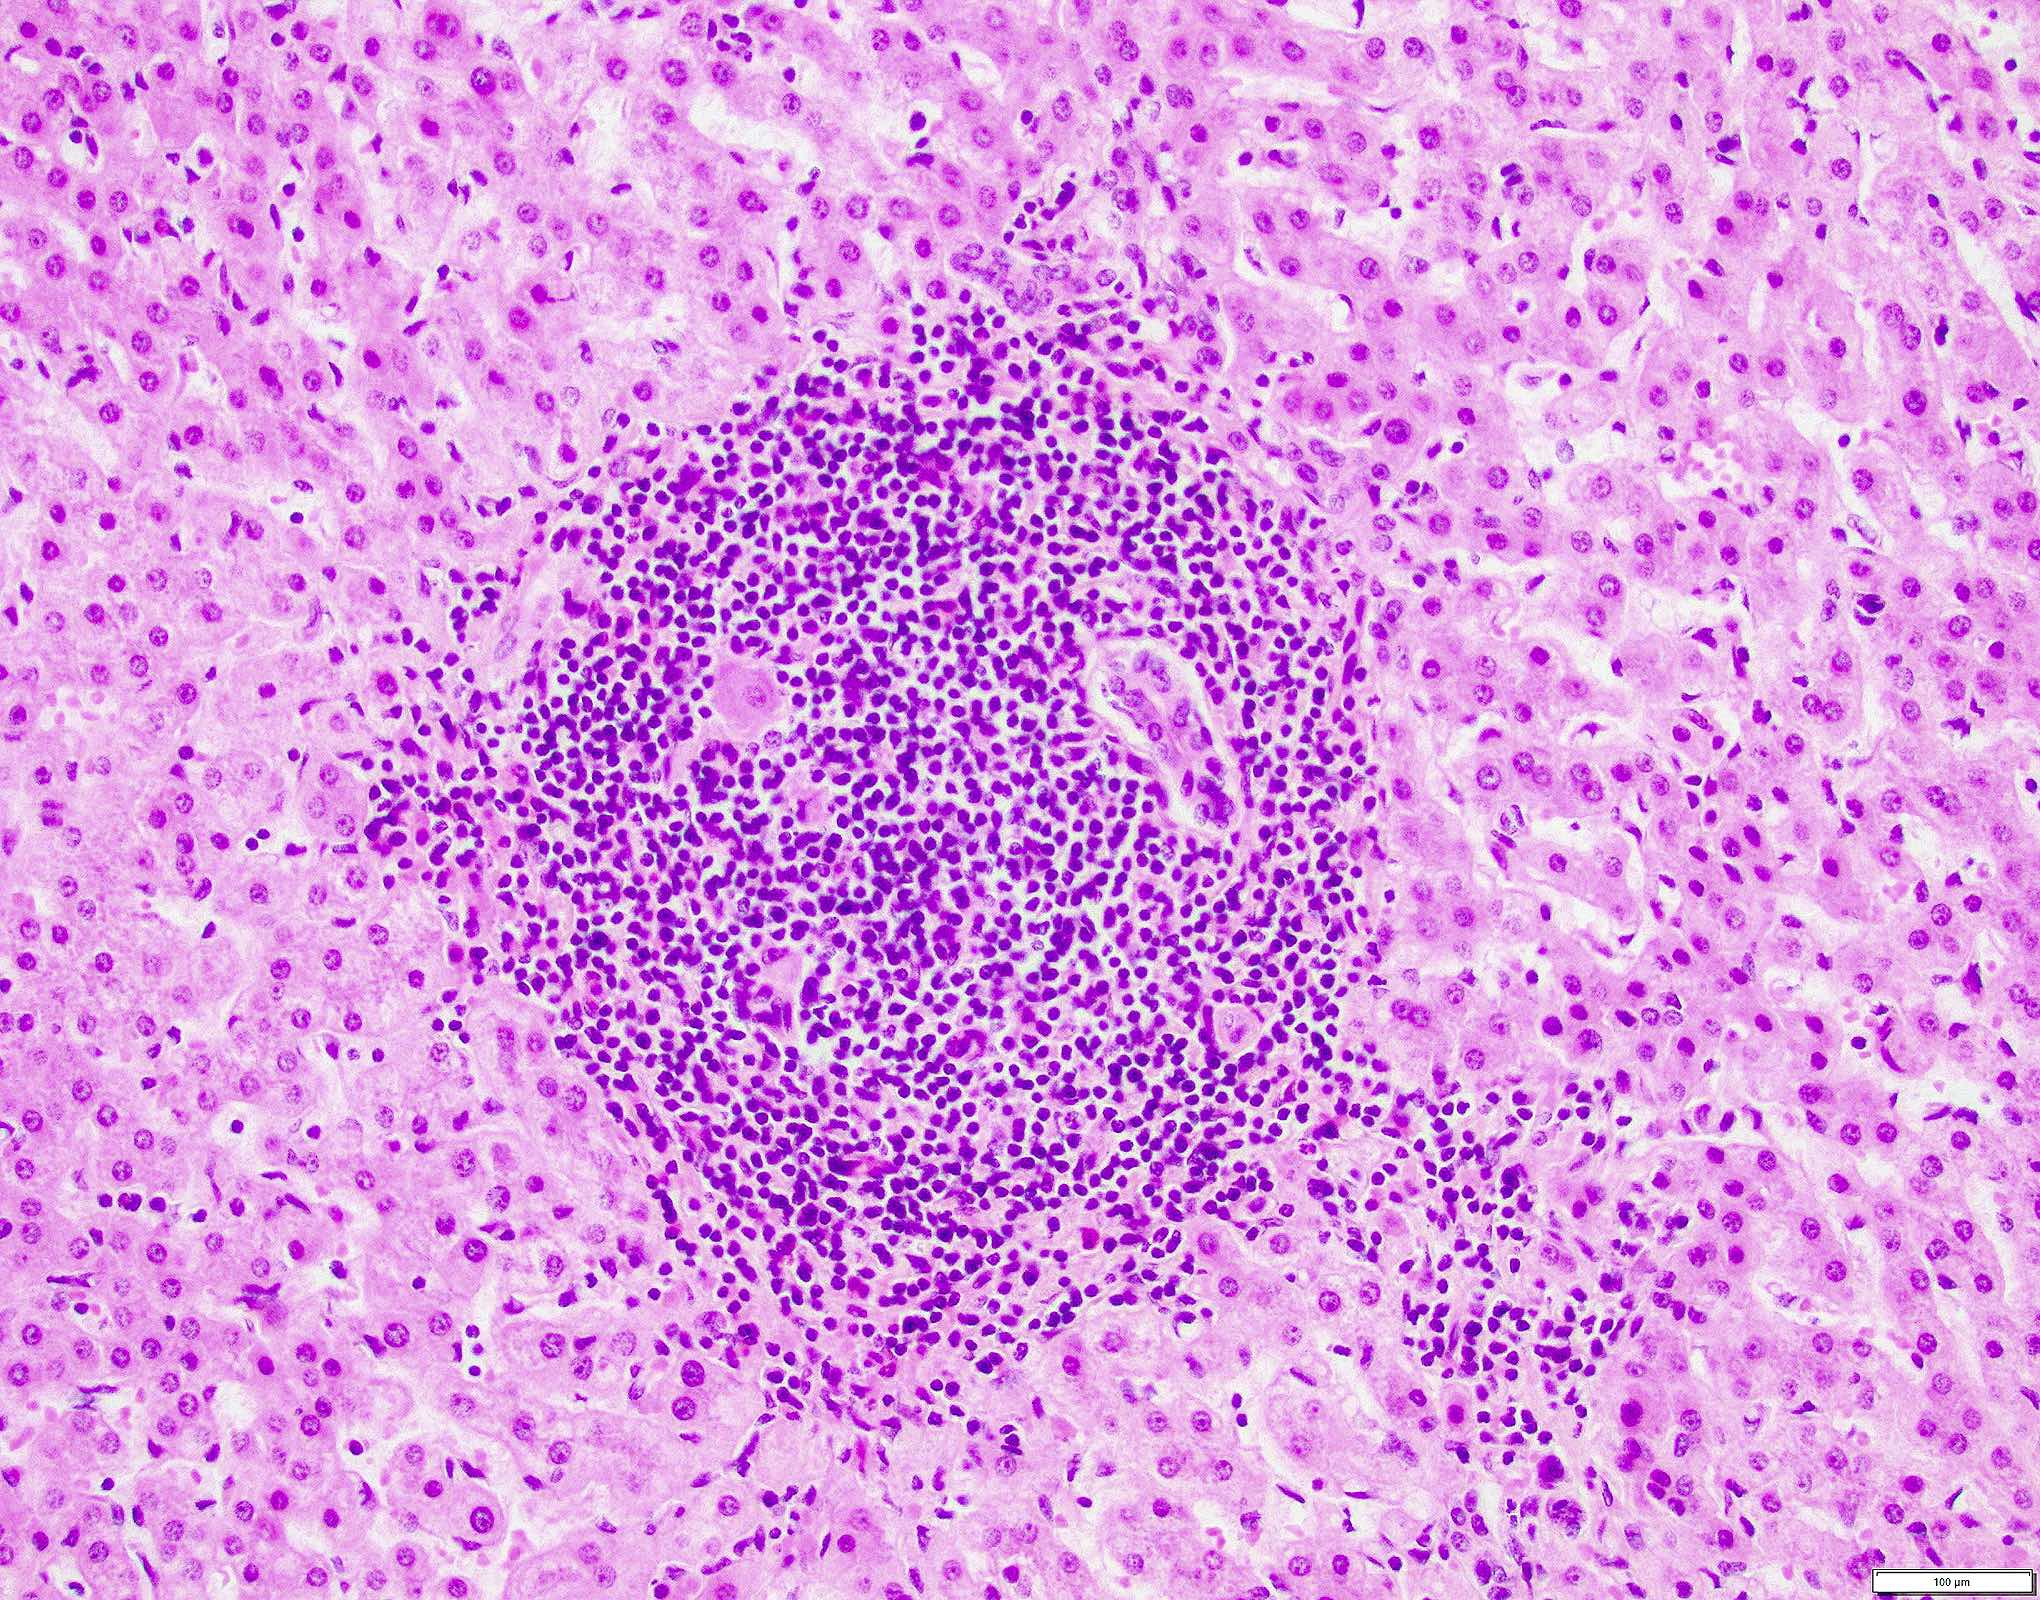 HCV portal lymphoid aggregate